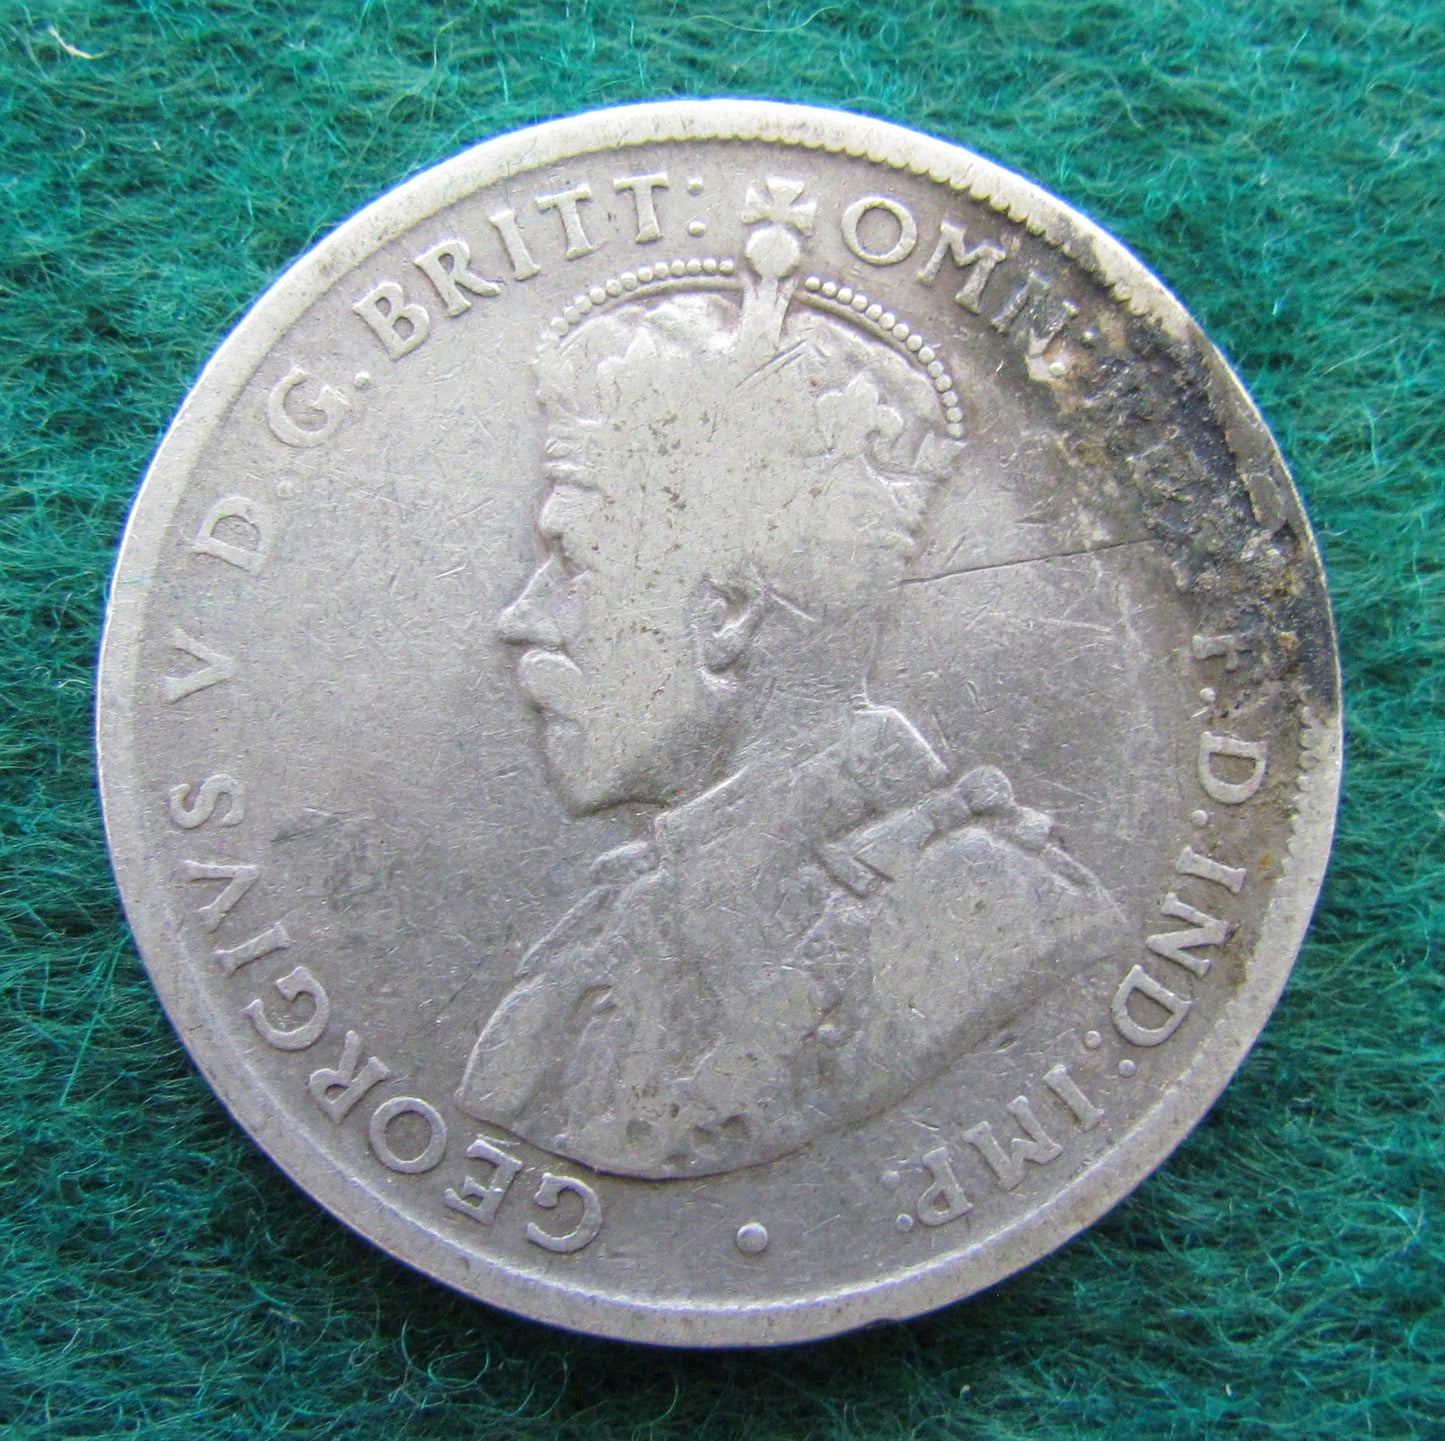 Australian 1918 M 2/- Florin King George V Coin - Circulated - Lamination Error